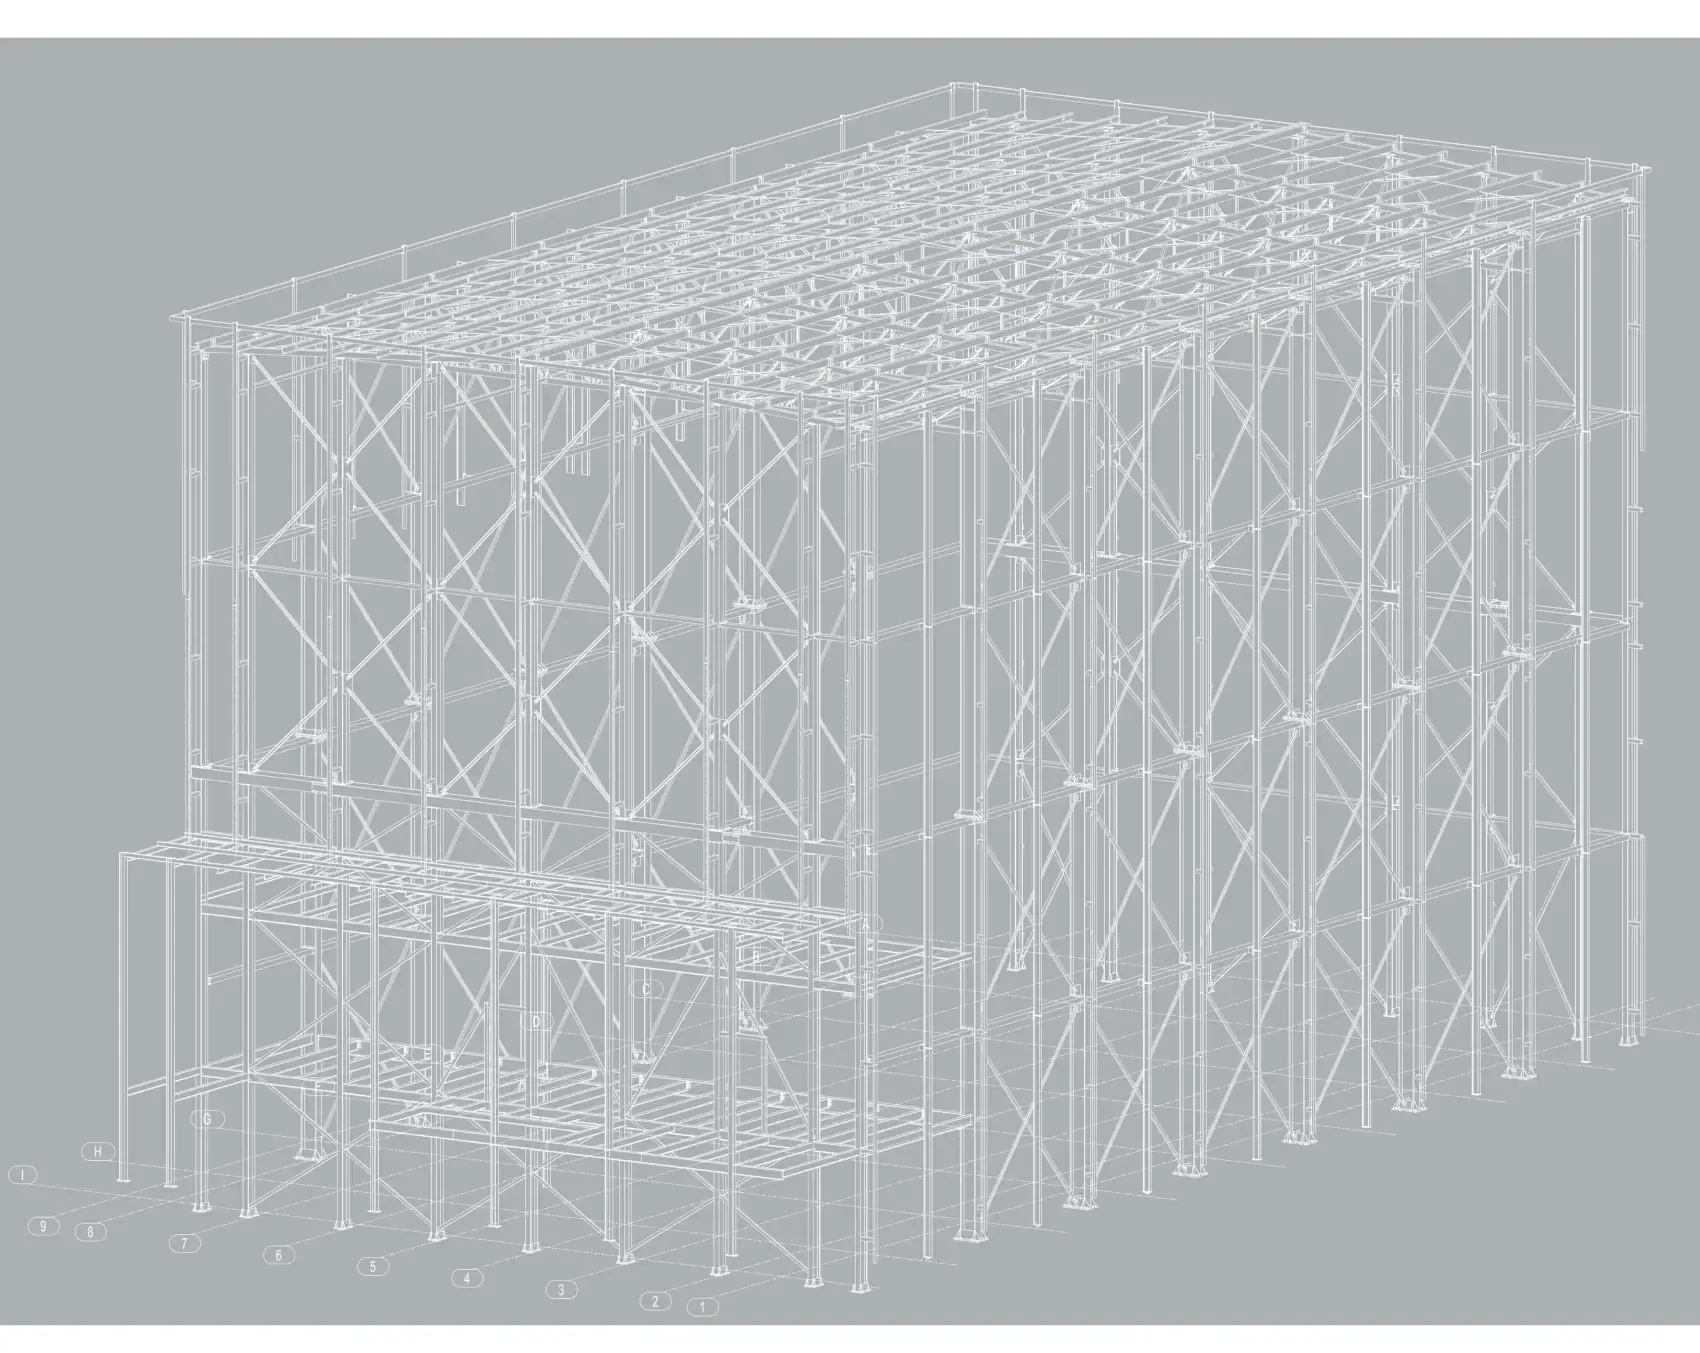 Progettazione torri silos acciaio 6205_4 | Mangili & Associati Spa